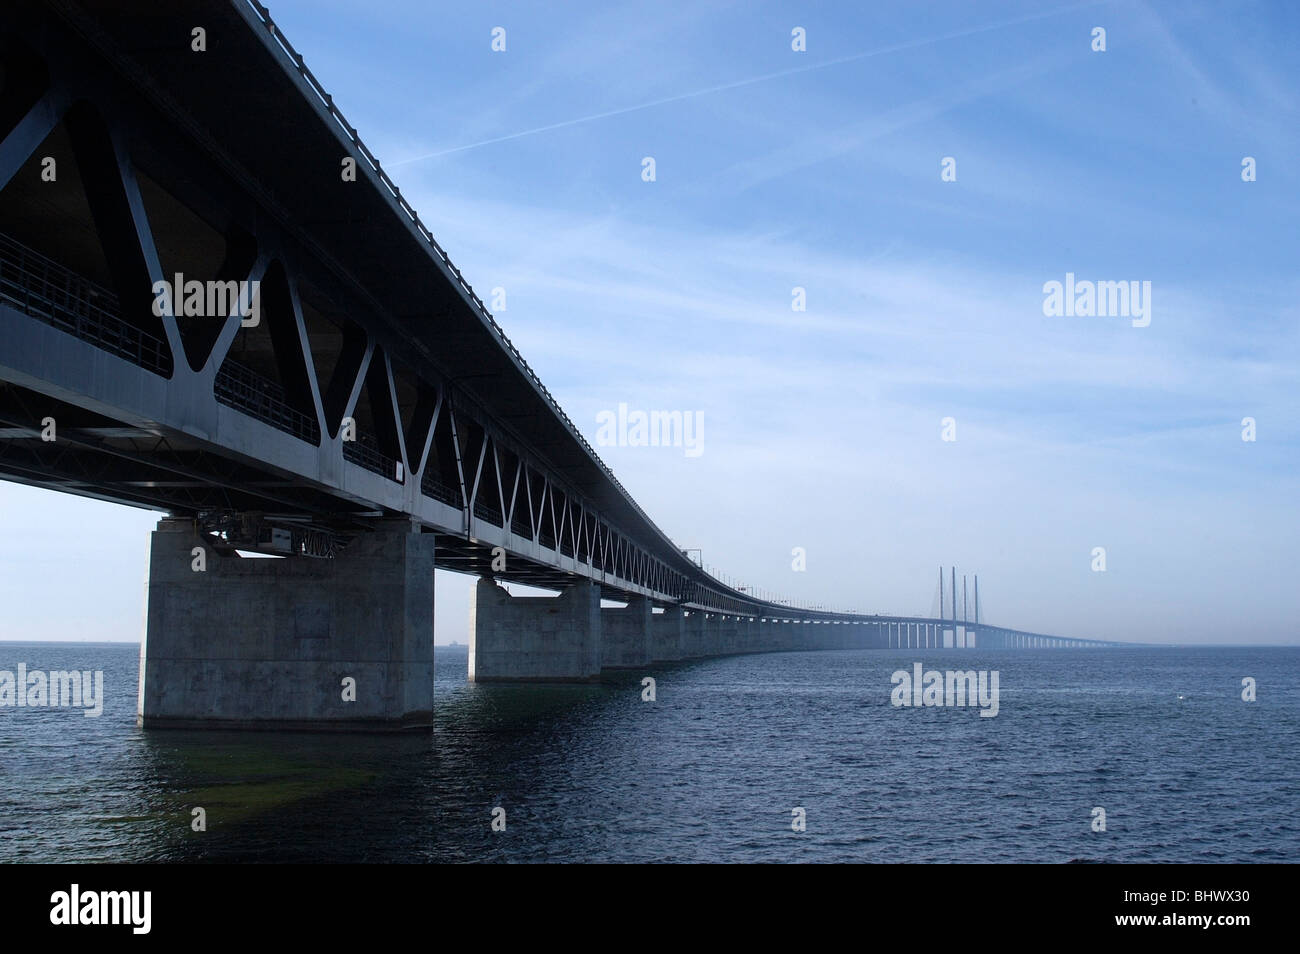 The Øresund or Öresund Bridge between Denmark and Sweden, from the Danish side. Stock Photo